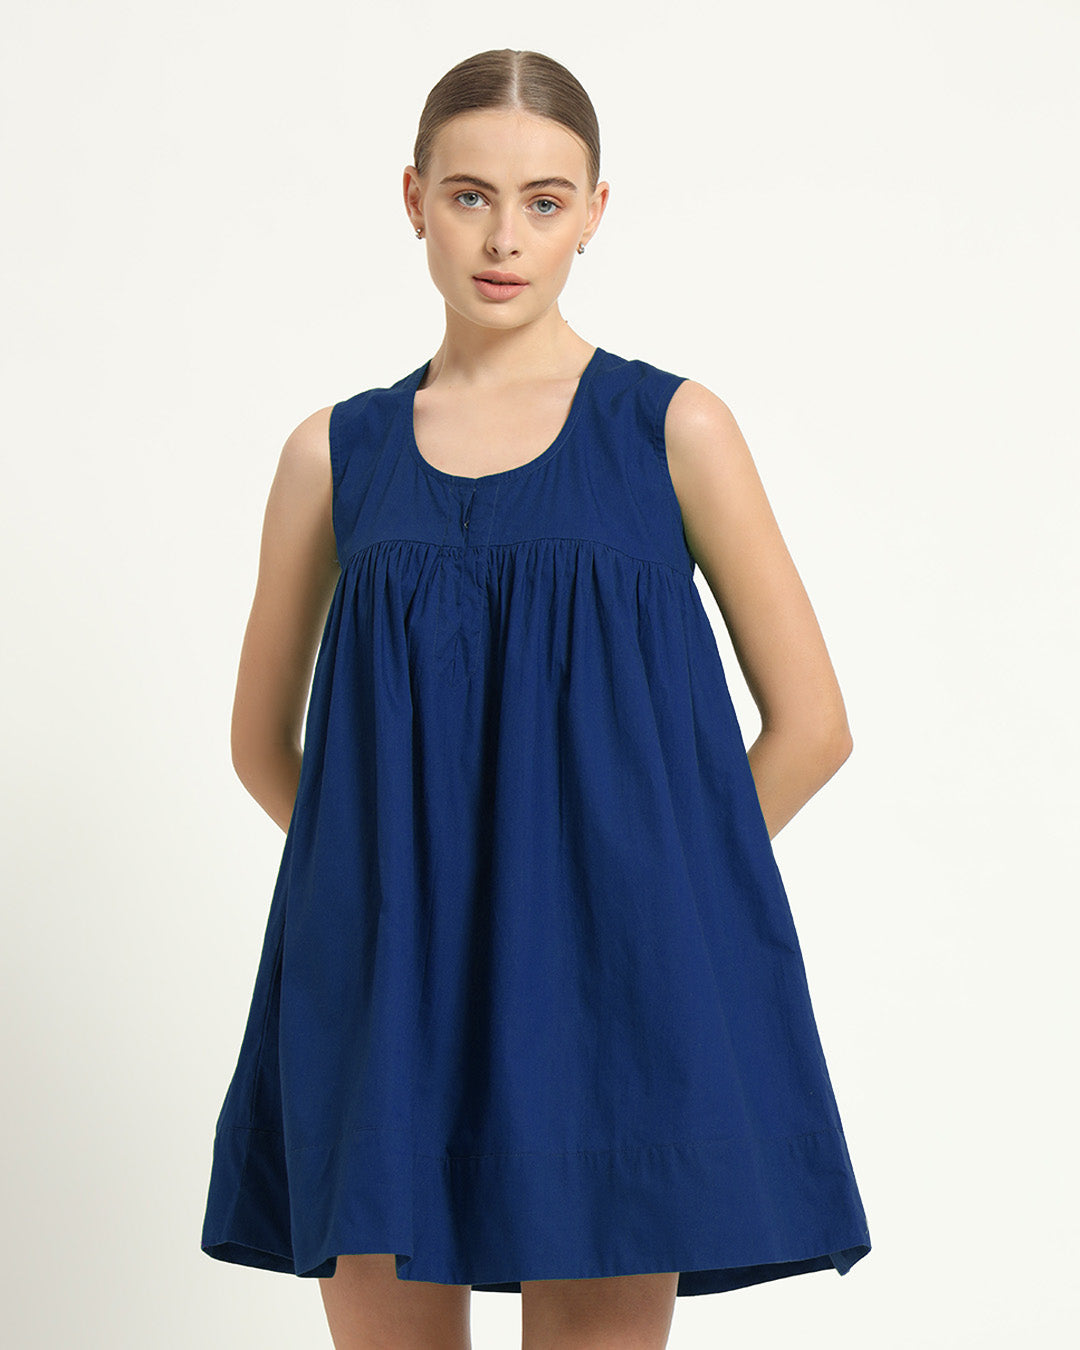 The Jois Cobalt Cotton Dress